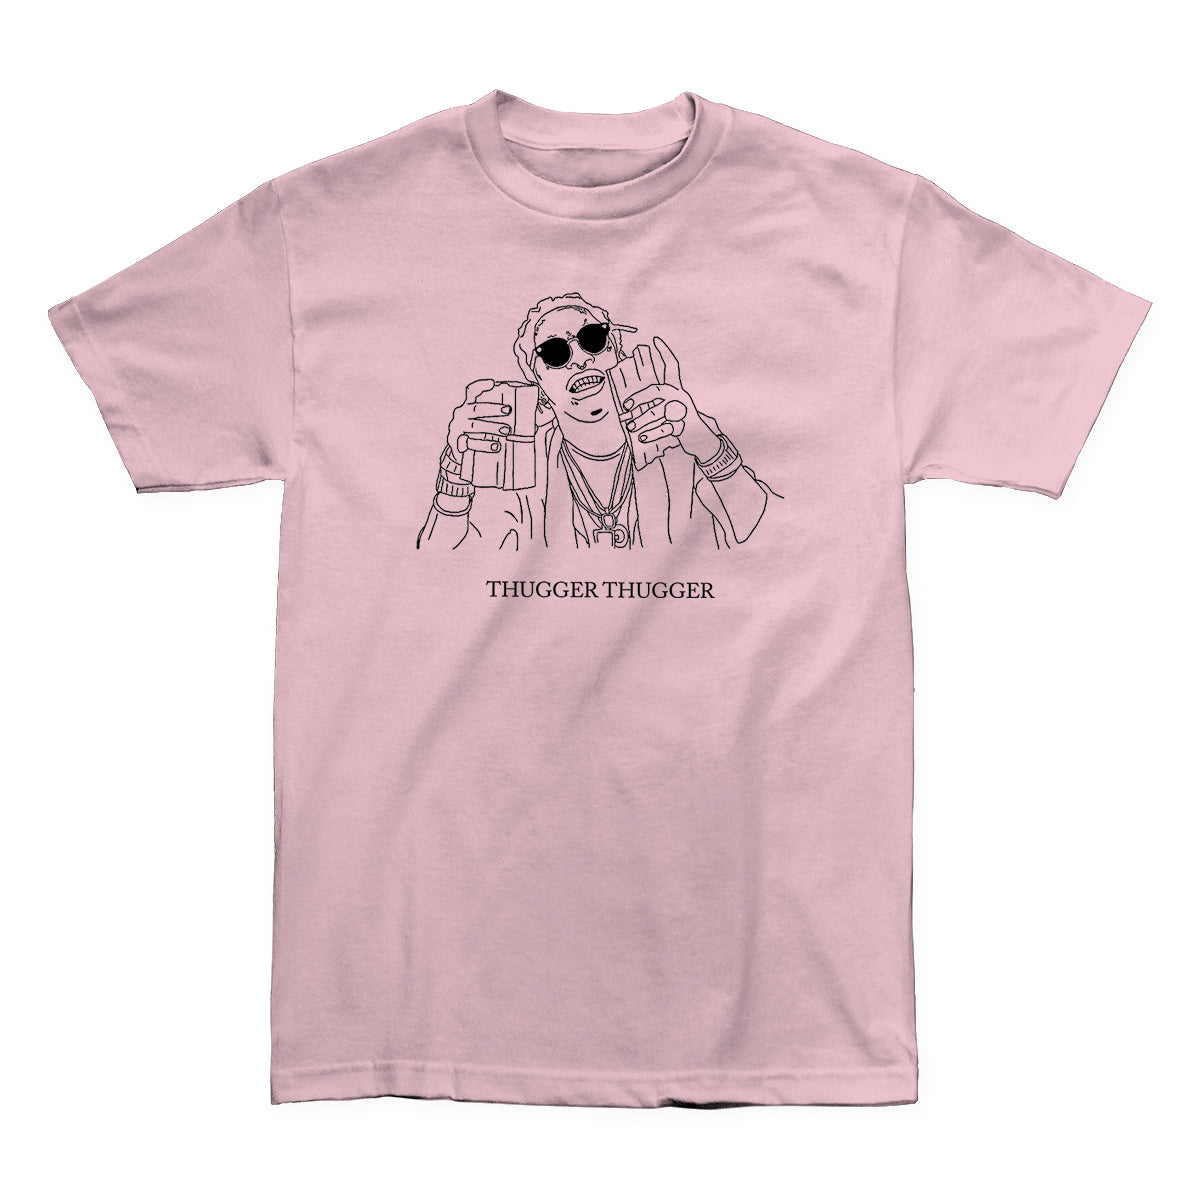 Superrradical "Thugger" Shirt